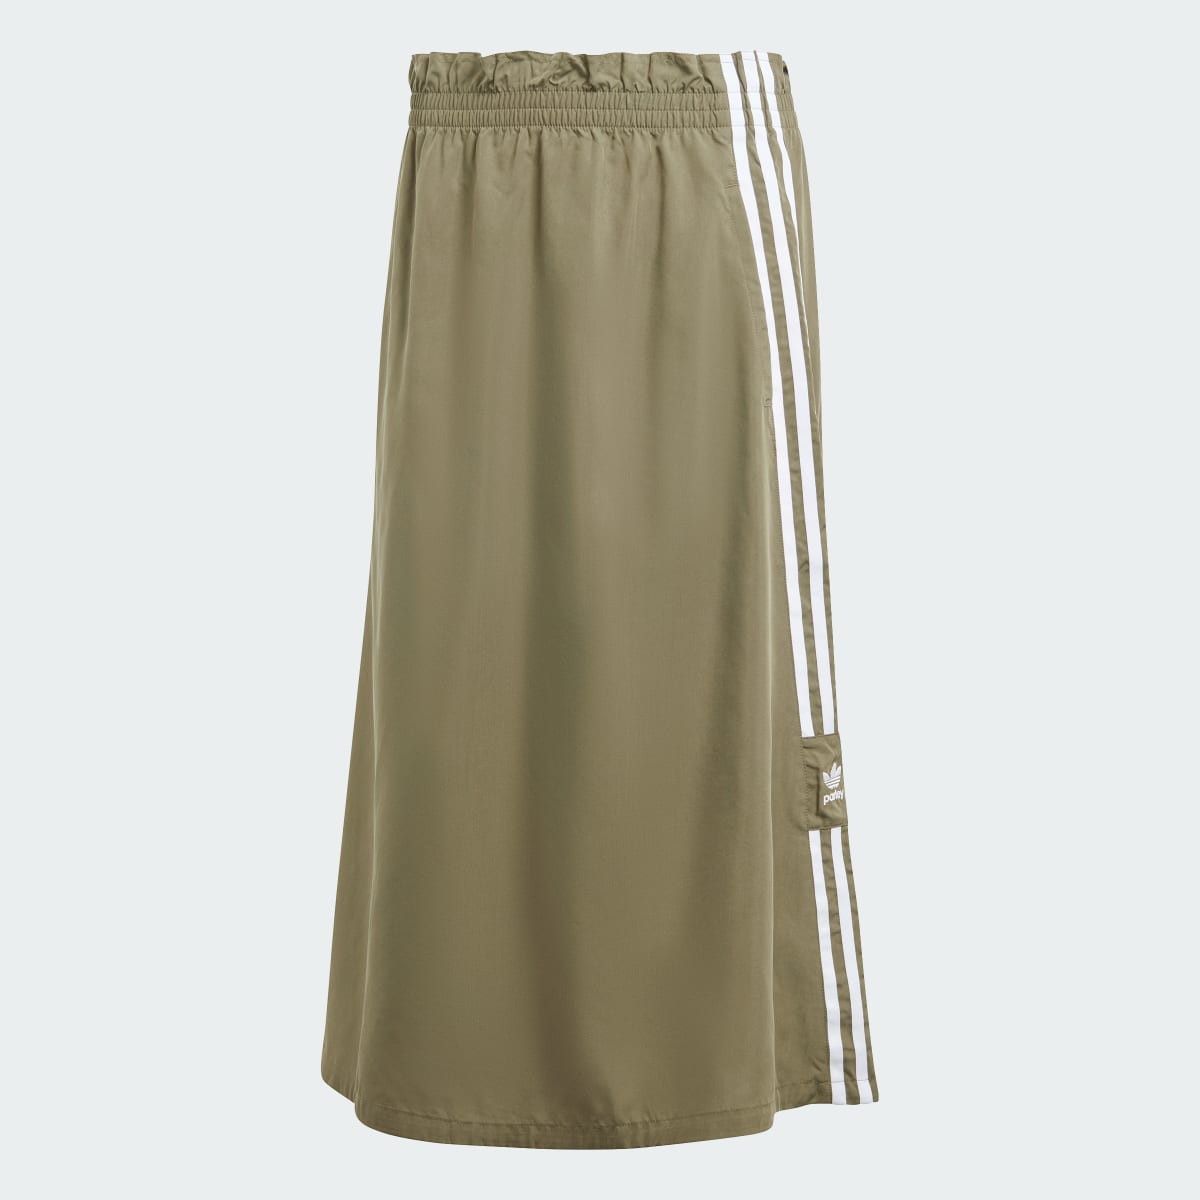 Adidas Parley Skirt. 4